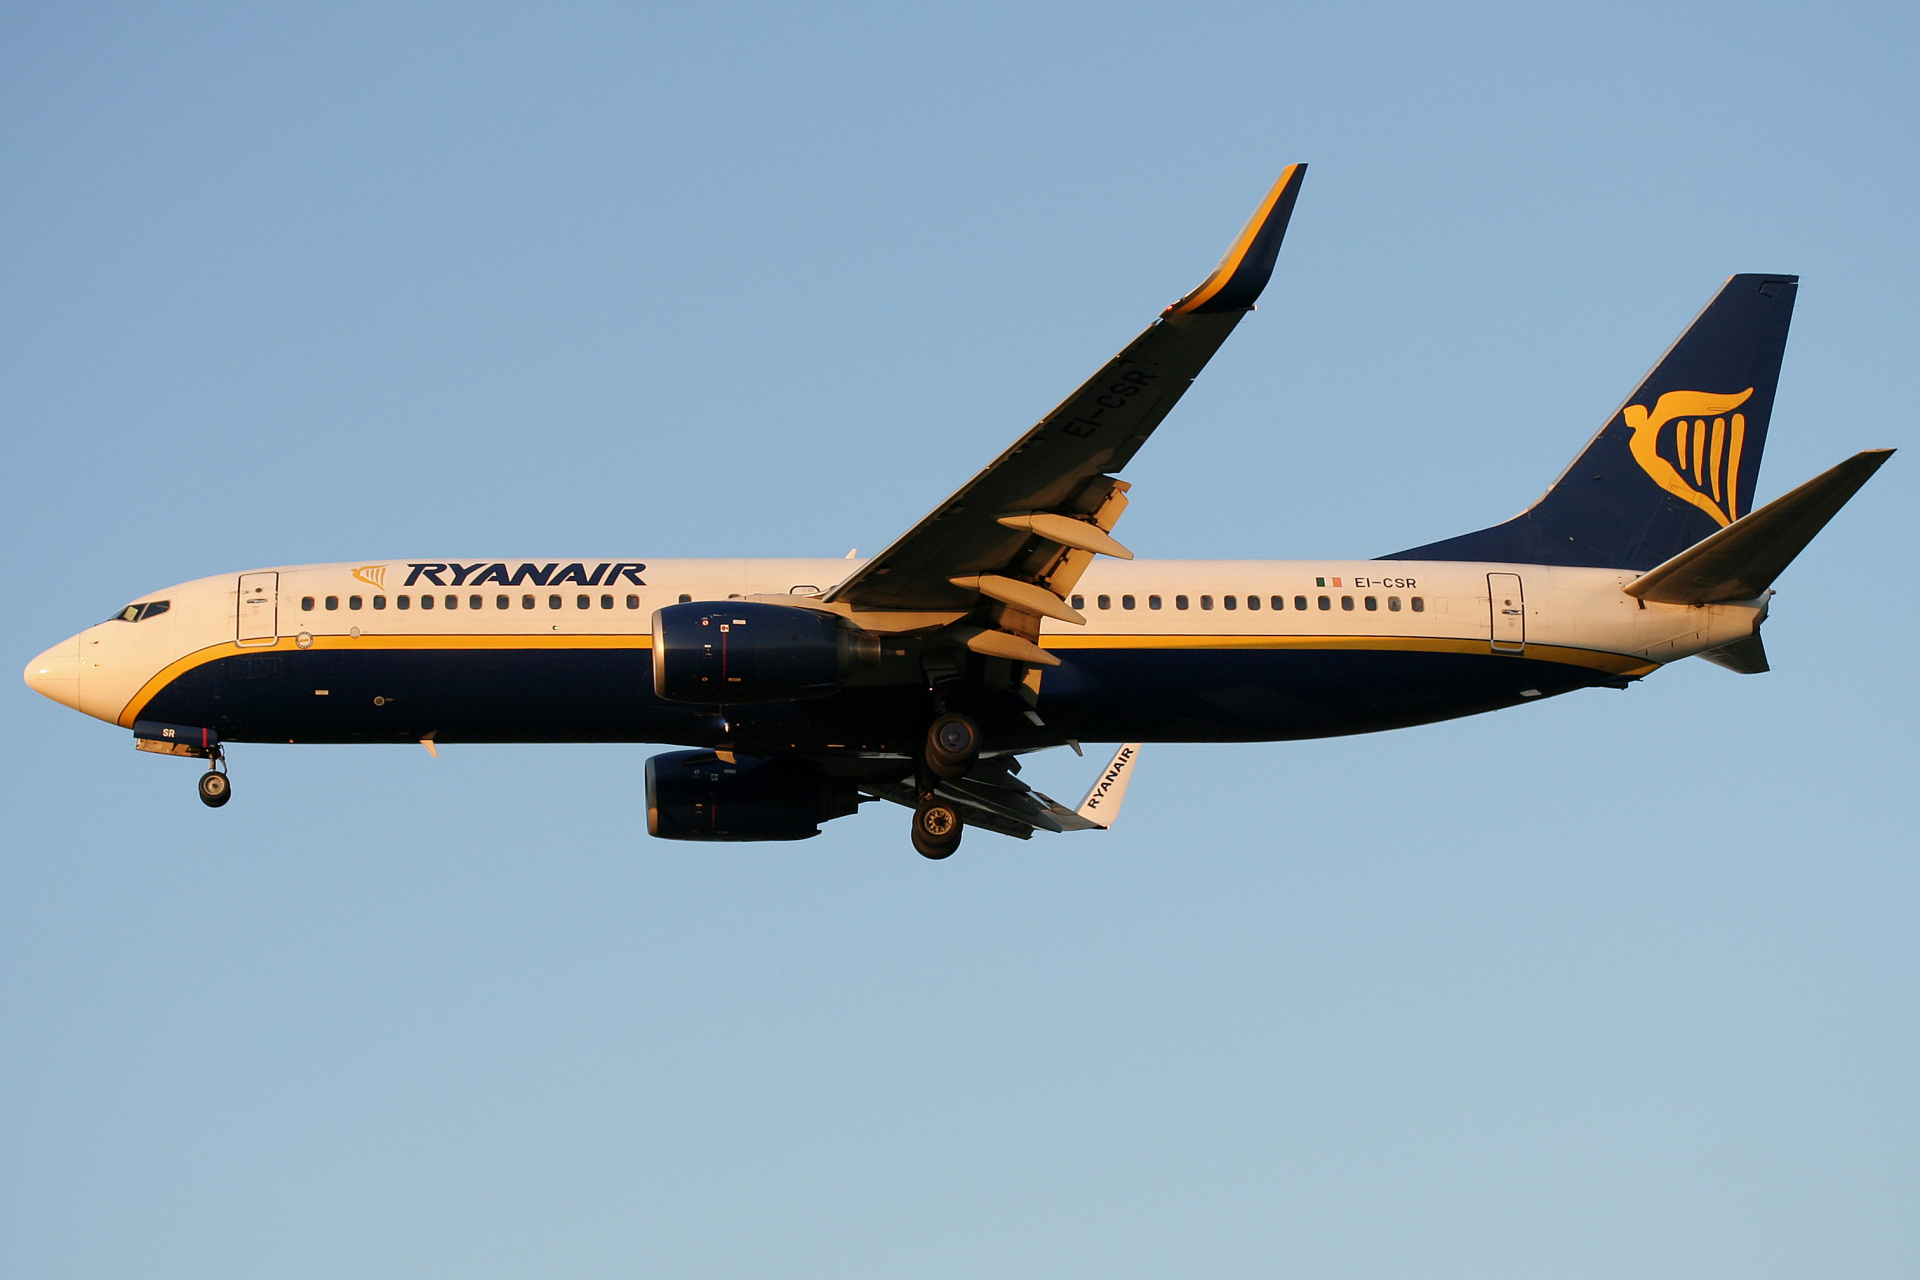 EI-CSR (Aircraft » EPWA Spotting » Boeing 737-800 » Ryanair)